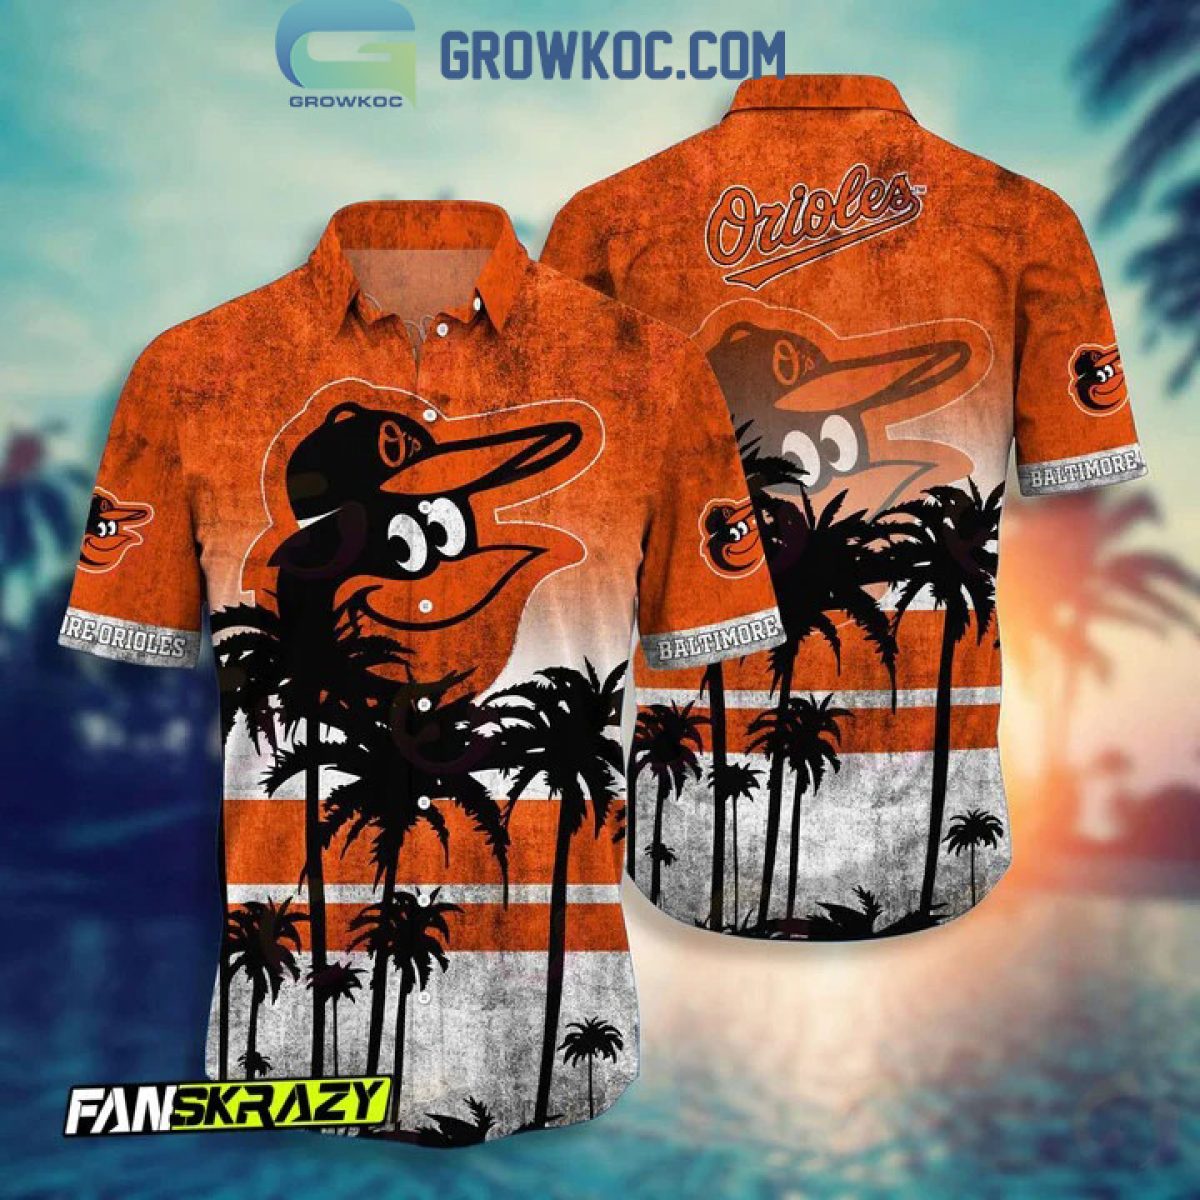 Baltimore Orioles Love Team Personalized Black Design Baseball Jersey -  Growkoc